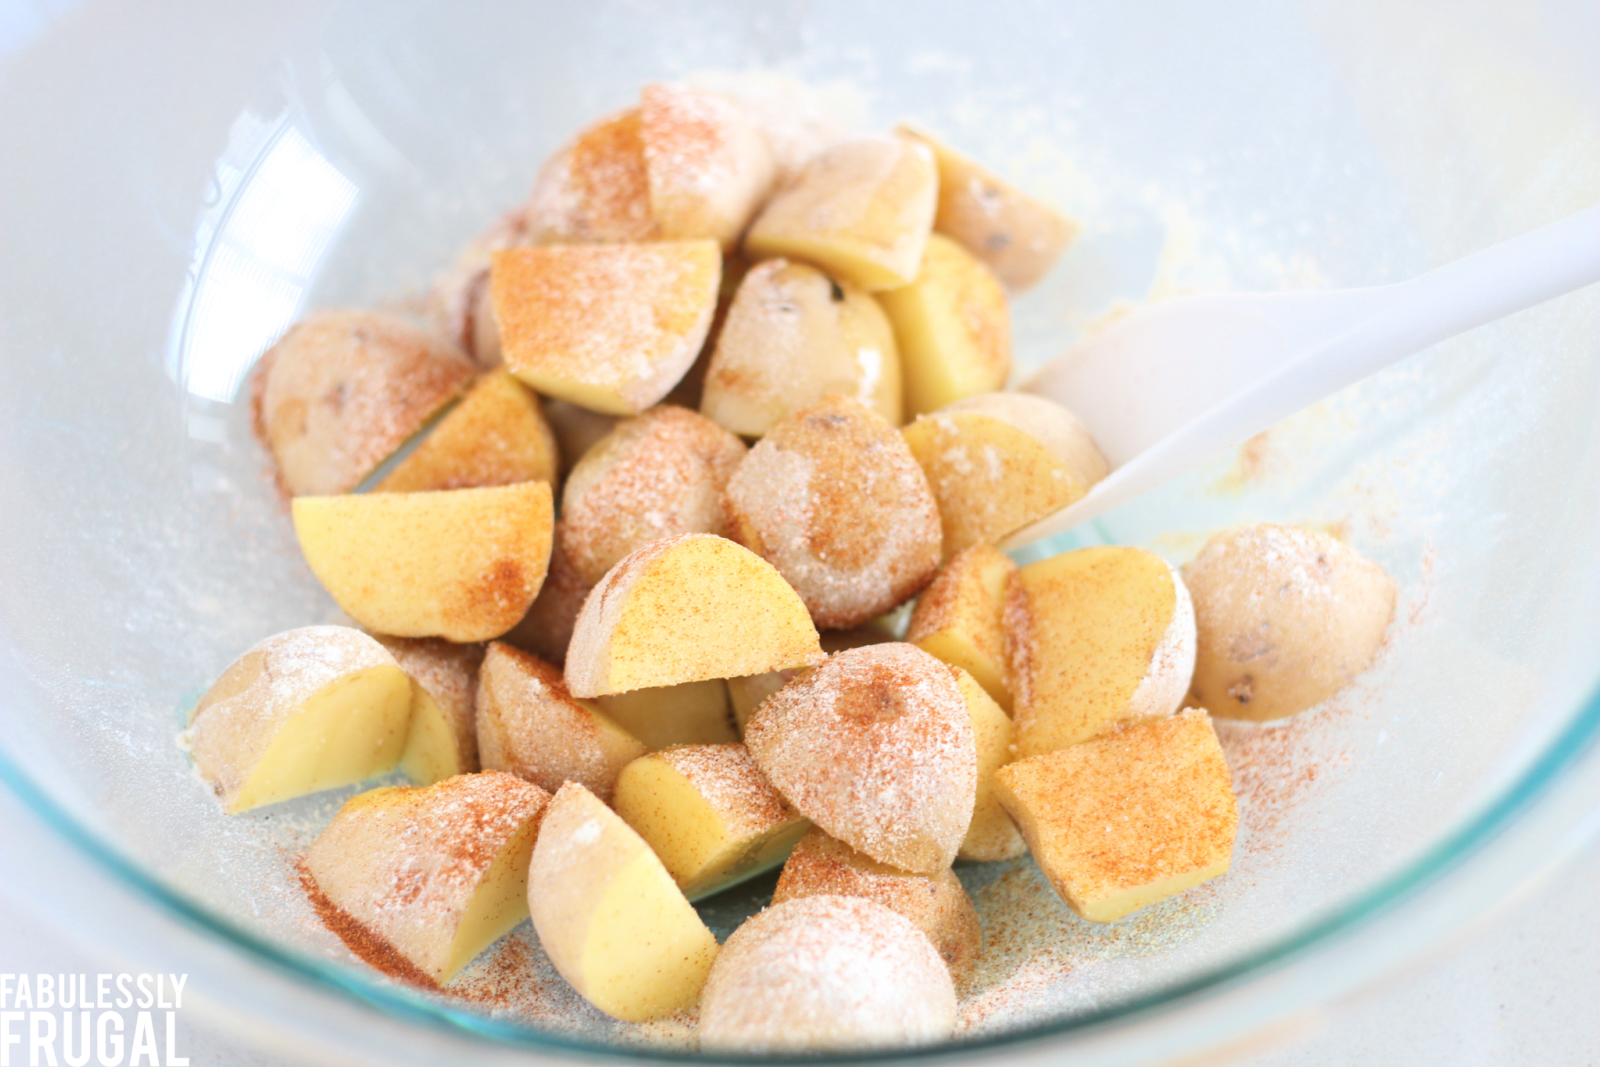 yukon gold yellow potatoes with seasoning